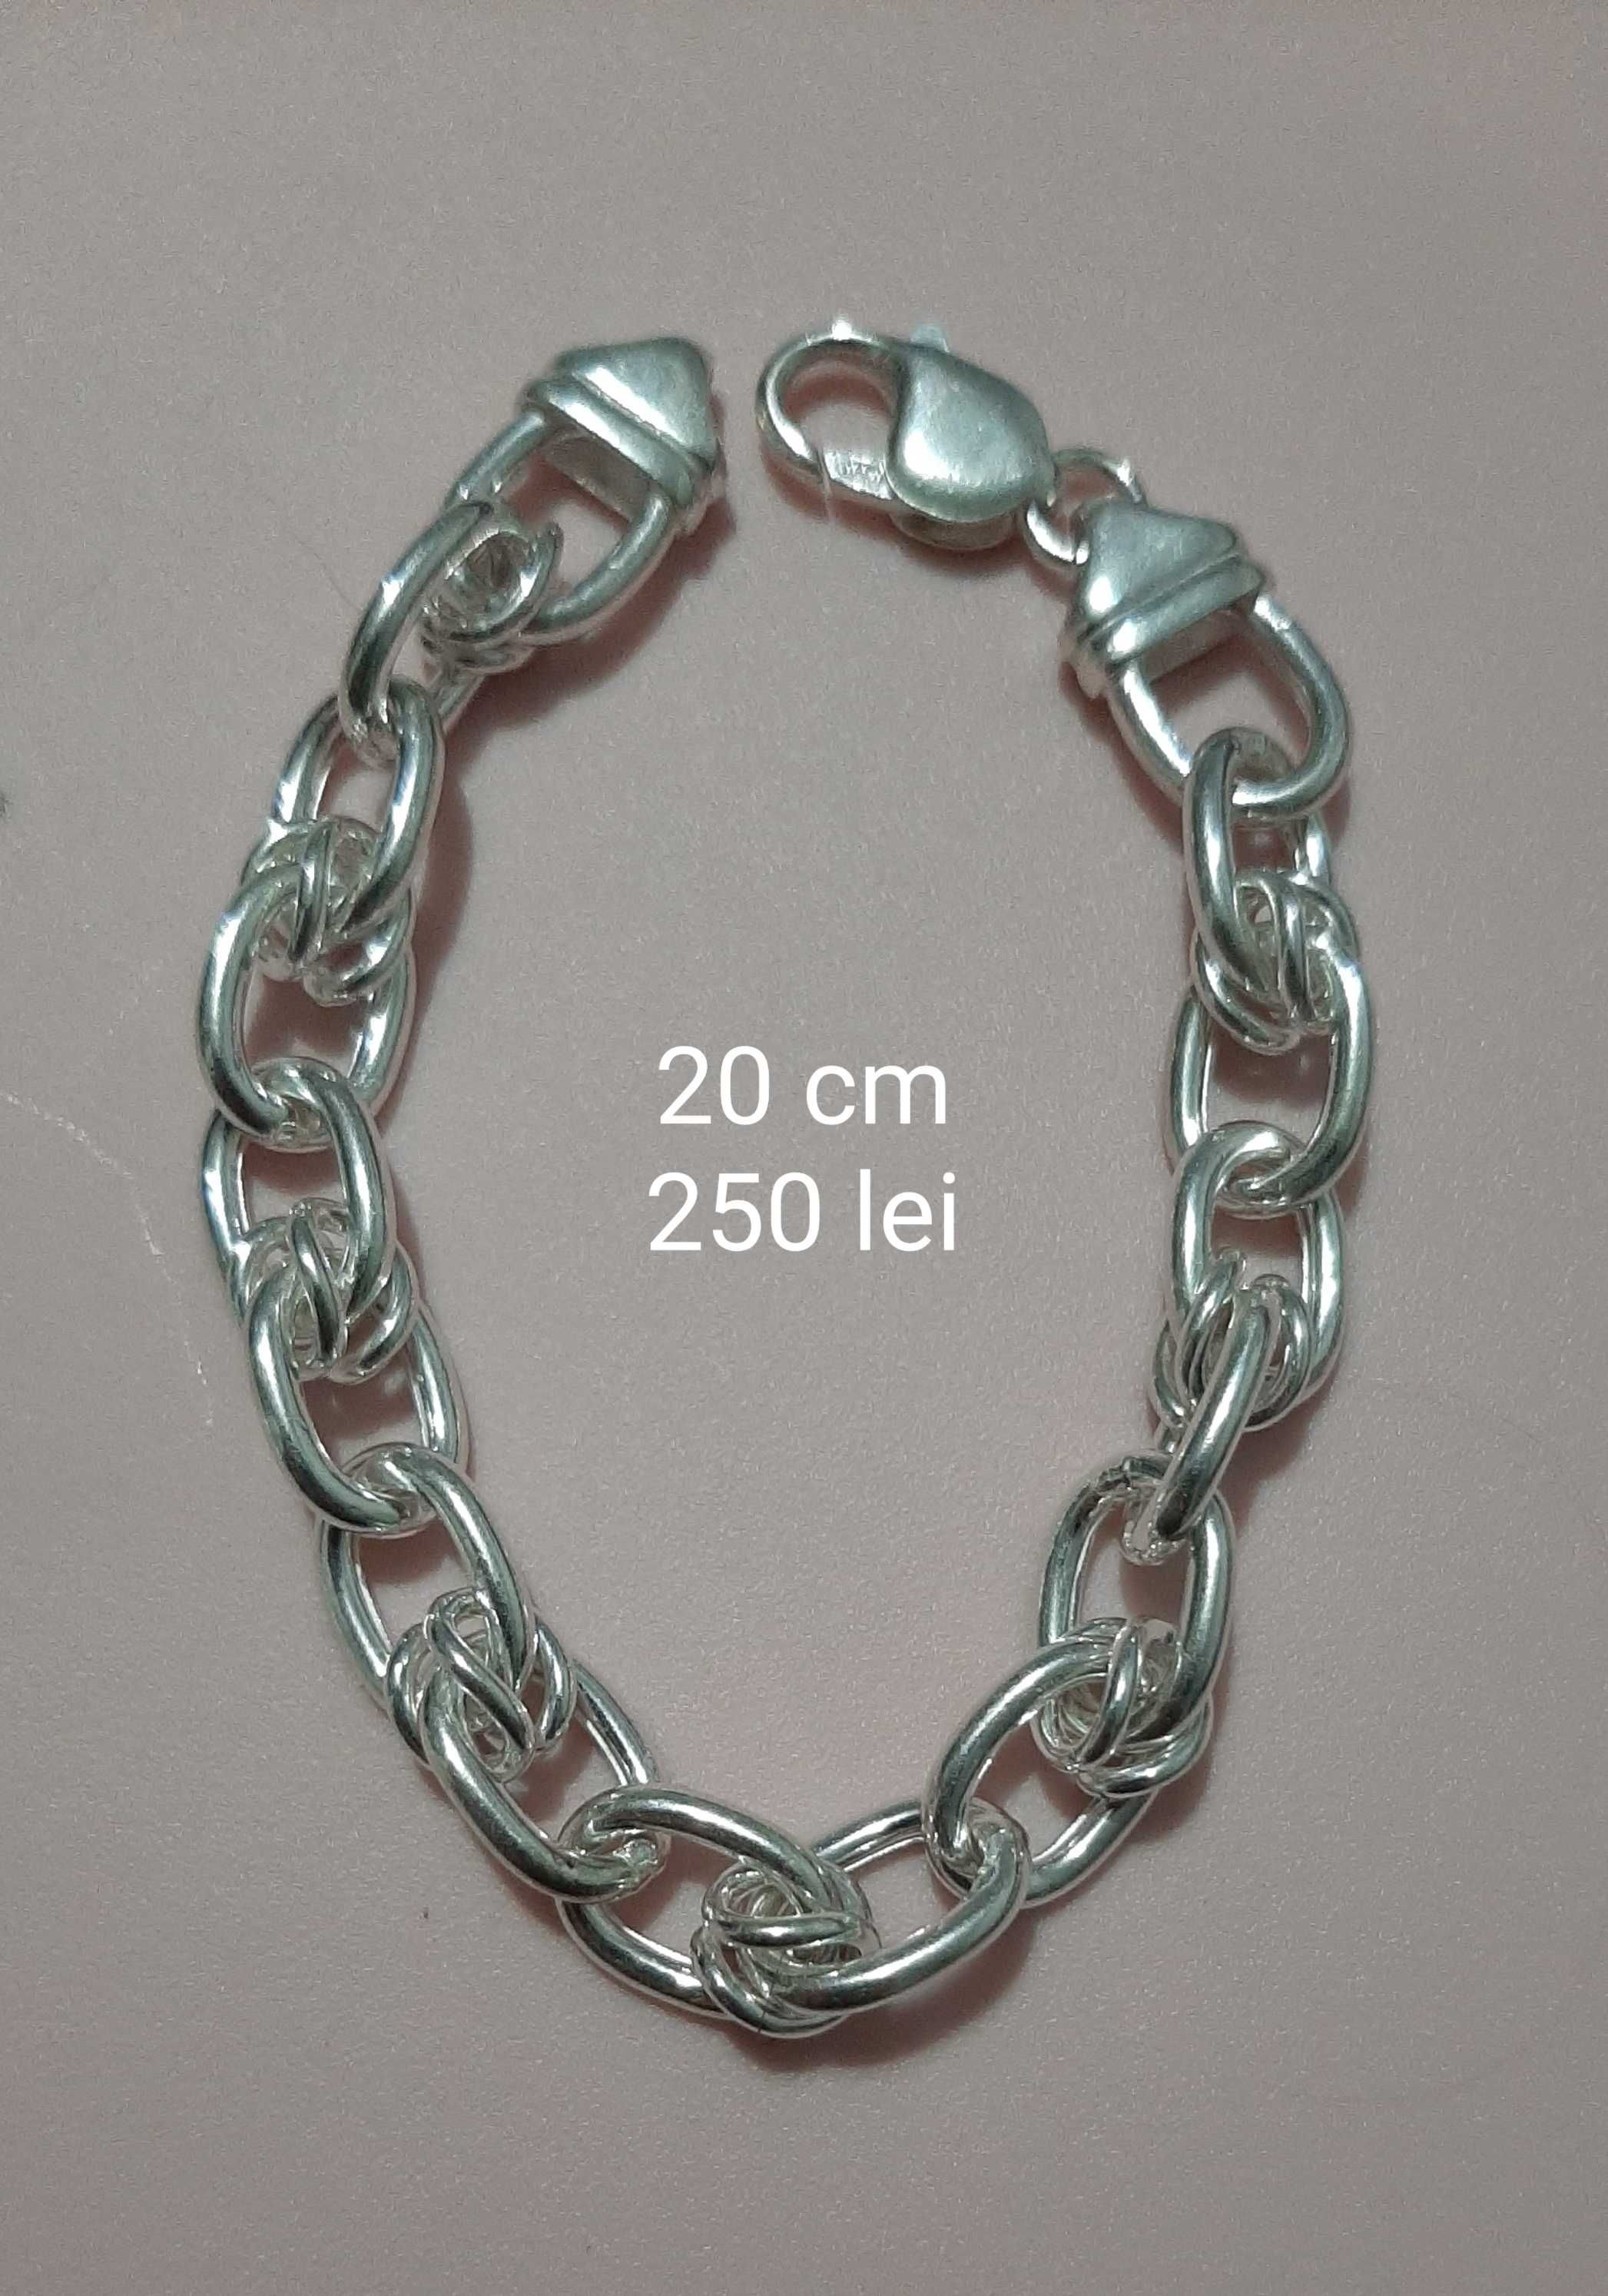 Bratara din argint 925, model unisex